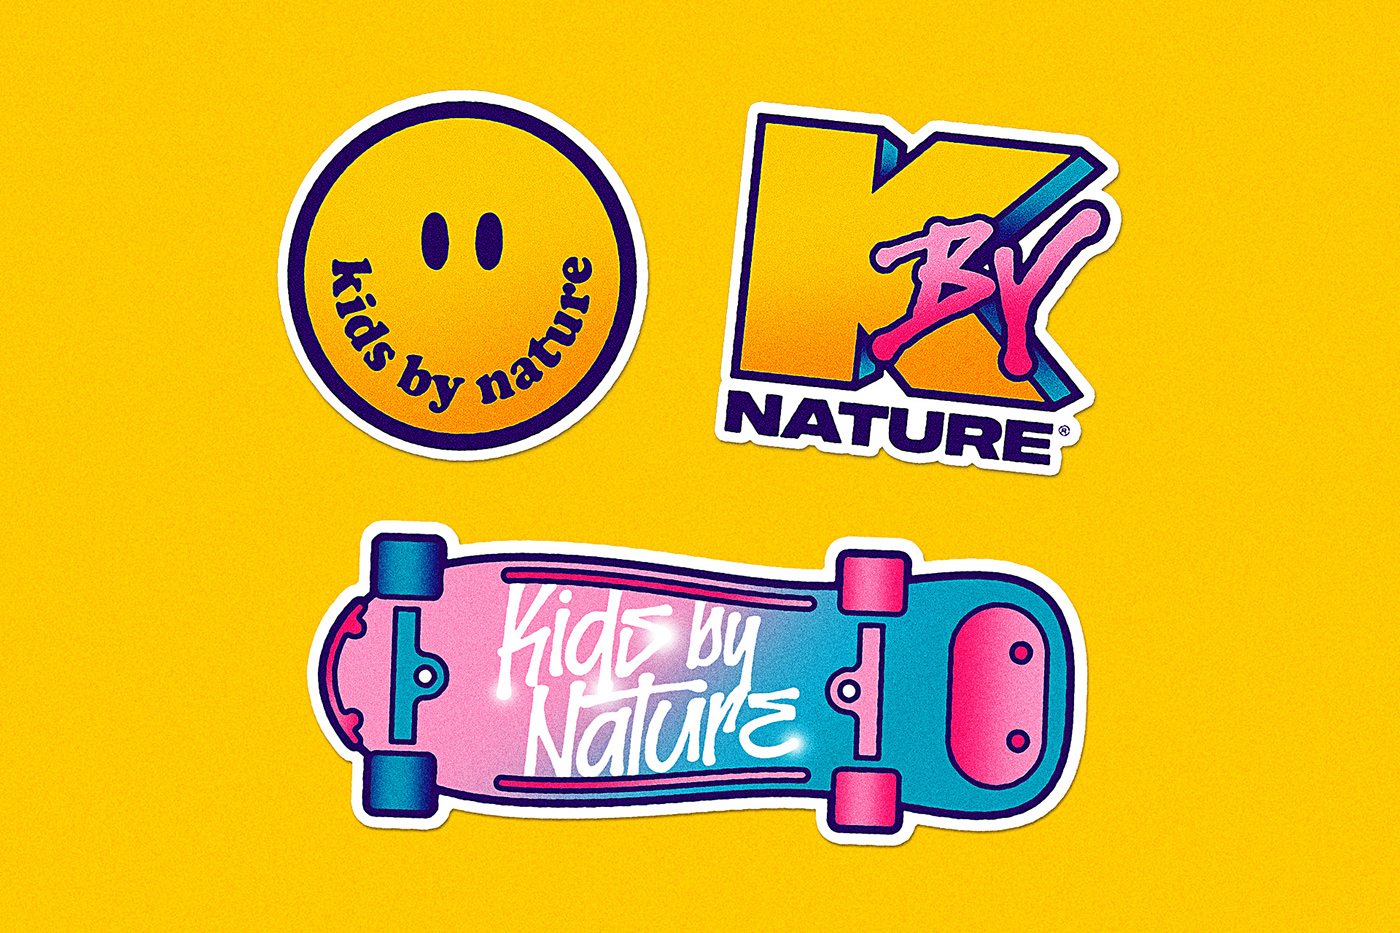 90s brand assets colorful festival Graphics Kit kids by nature logo spoof memorabilia skateboard summer